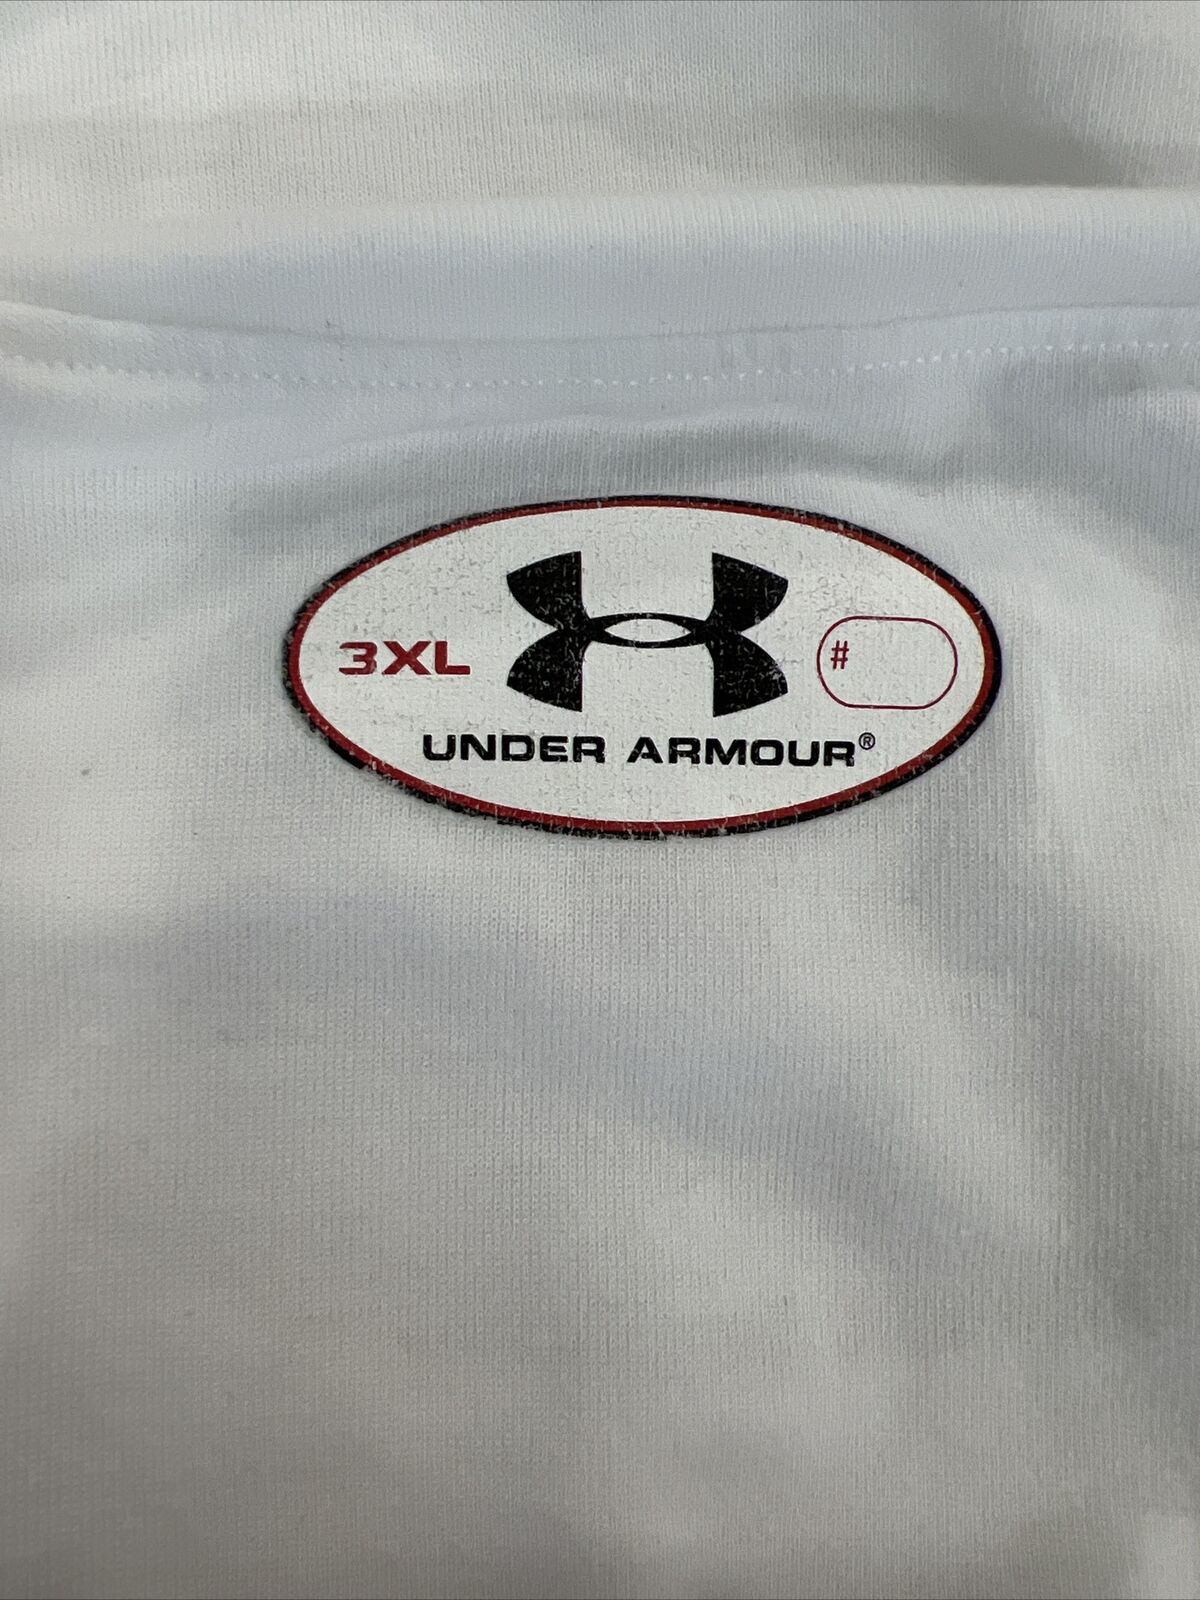 Under Armour Men's White Short Sleeve T-Shirt - 3XL